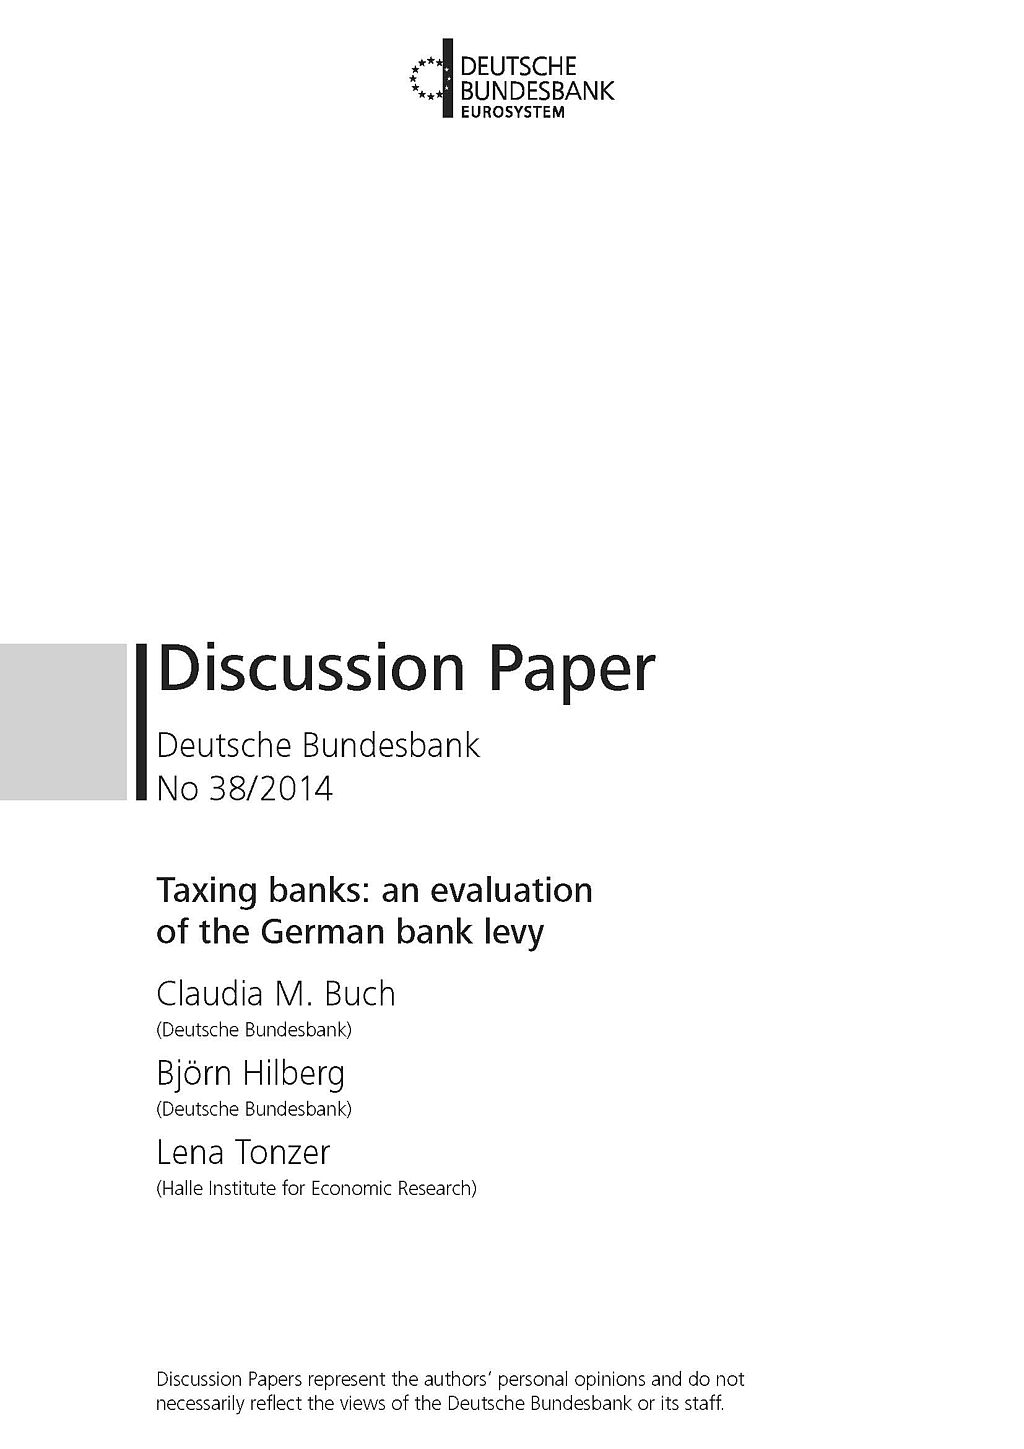 cover_Deutsche-Bundesbank-Discussion-Paper_2014-38.jpg